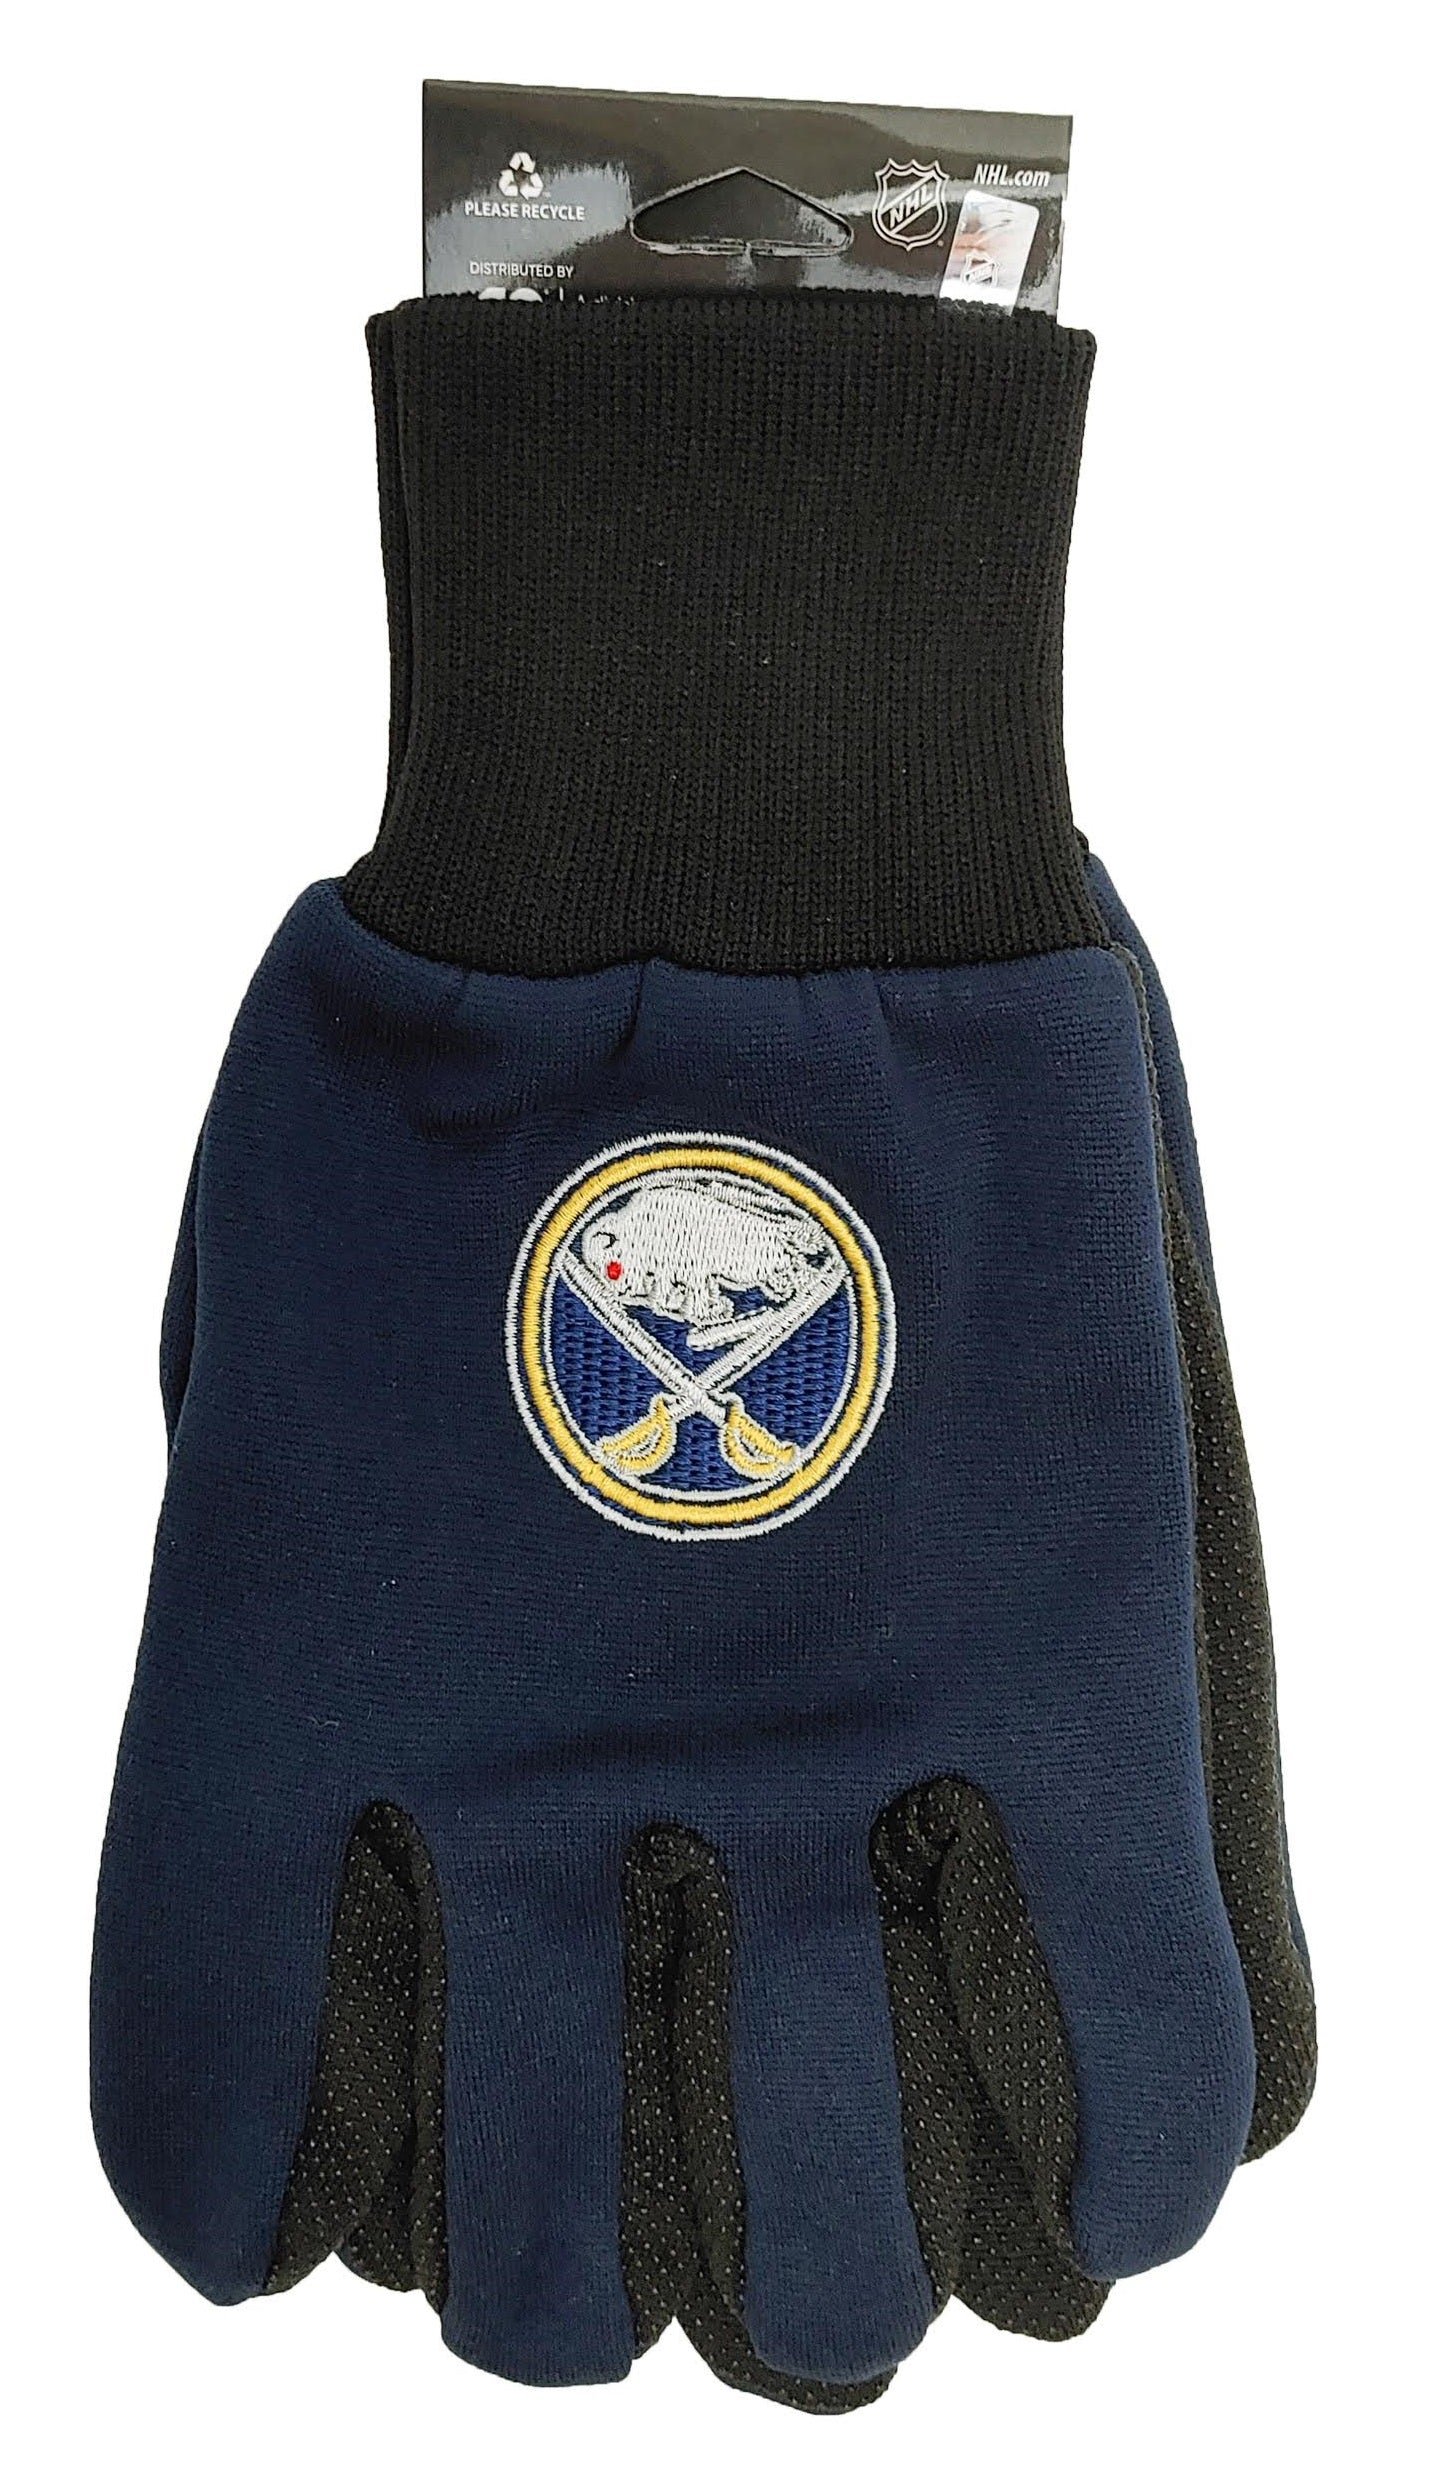 Buffalo Sabres Sport Utility Gloves